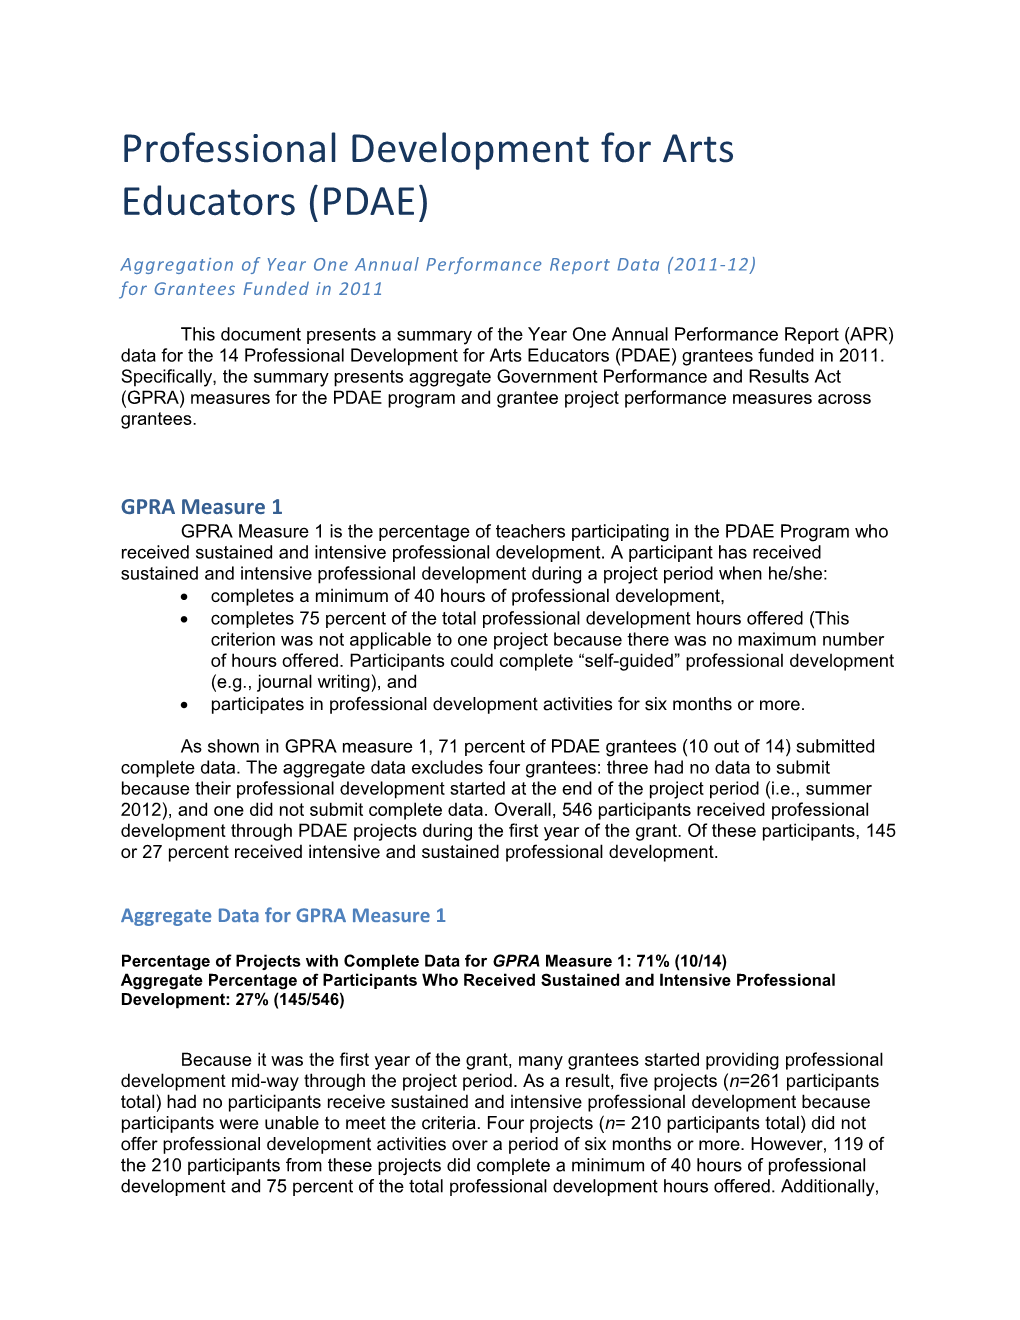 Professional Development for Arts Educators (PDAE)